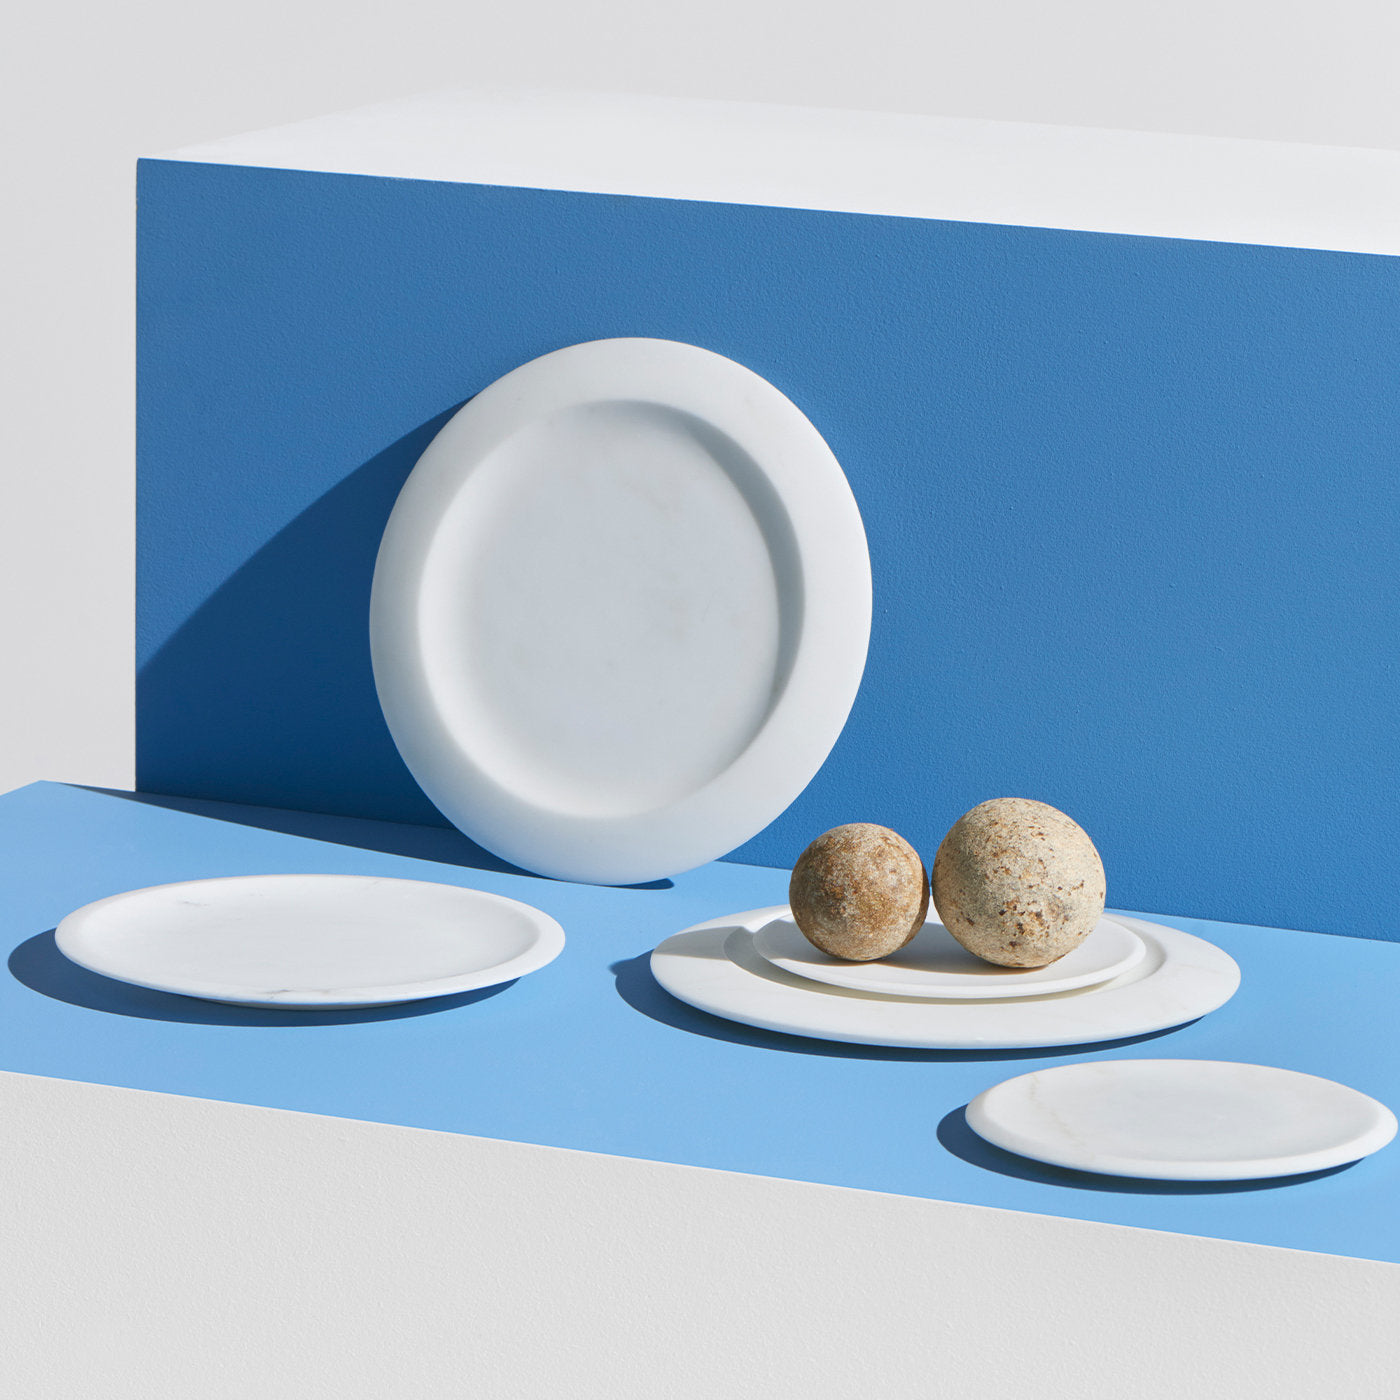 White Carrara Dinner Plate by Ivan Colominas #2 - Alternative view 1